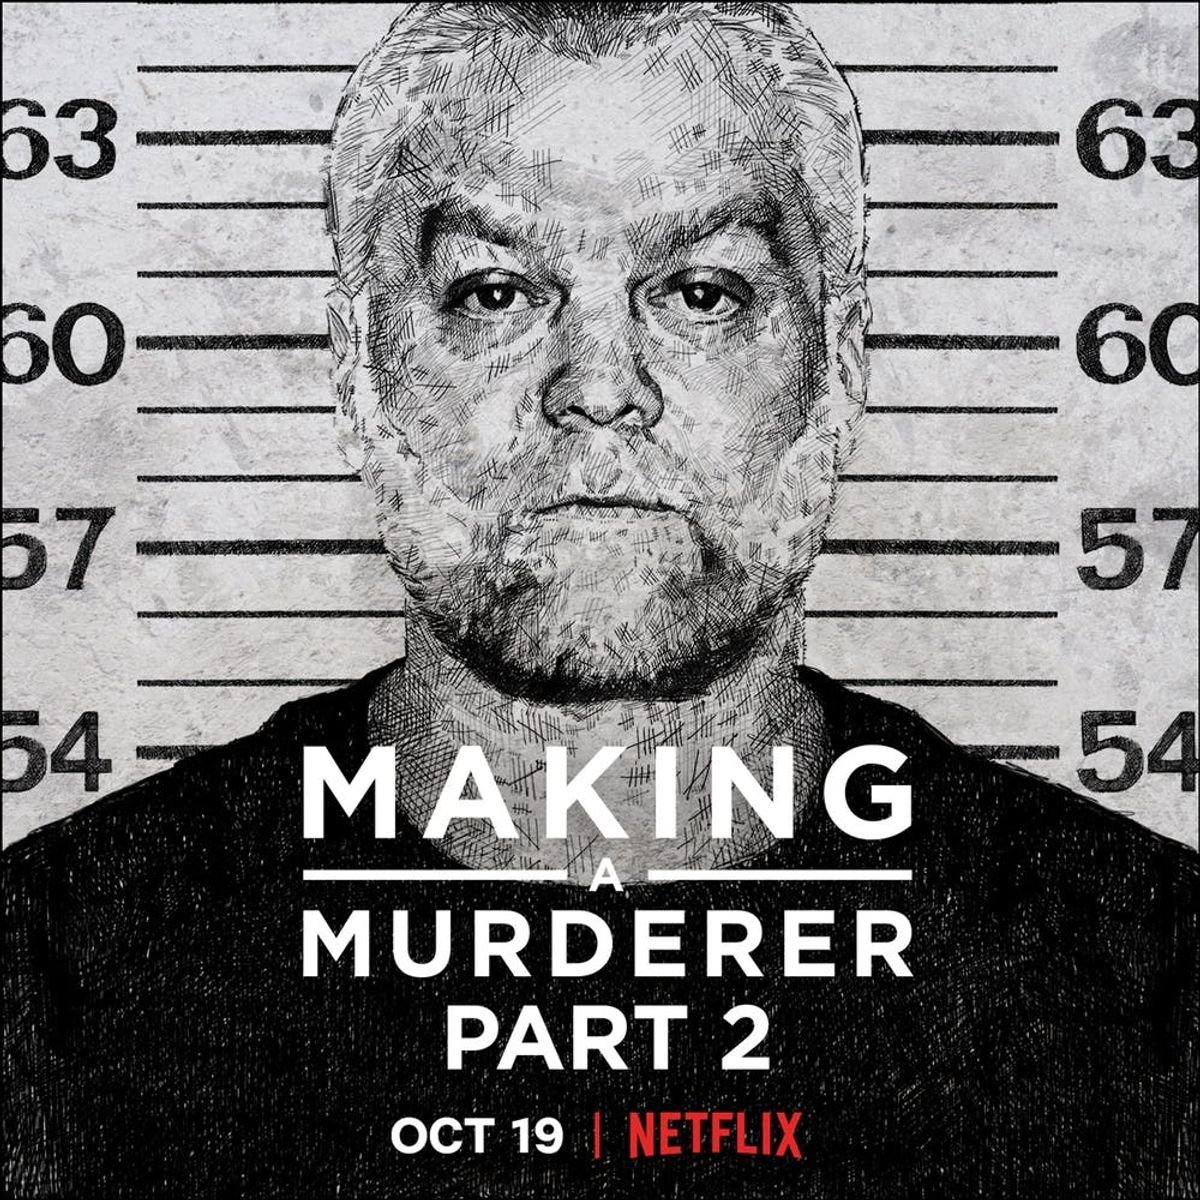 Watch the First Official Trailer for Netflix’s ‘Making a Murderer: Part 2’